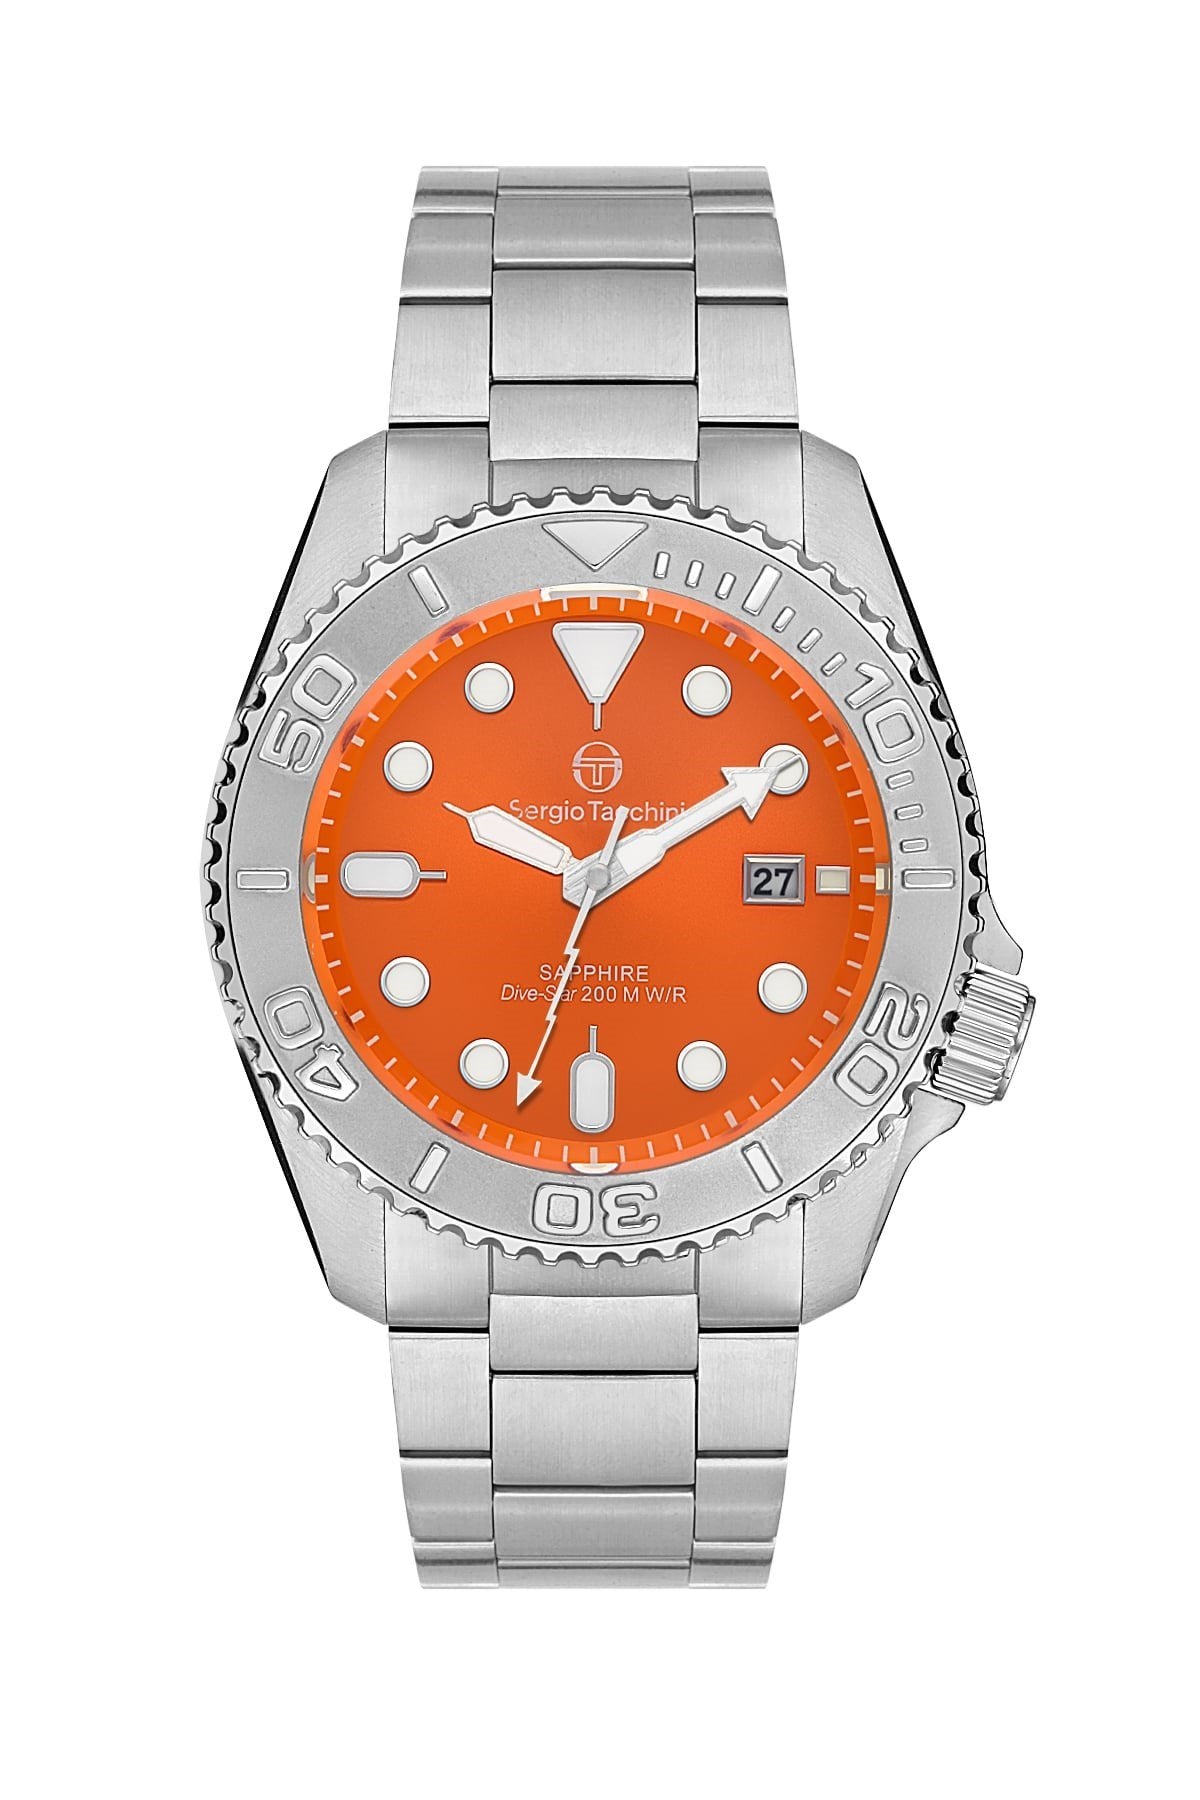 | Sergio Tacchini Men's Watch ST.3.10001-3 - Takreem Style | - #sho| Sergio Tacchini Men's Watch ST.3.10001-3 - Takreem Style |p_name#| Sergio Tacchini Men's Watch ST.3.10001-3 - Takreem Style |WatchSergio TacchiniTakreem.joST.3.10001-38682308231410SilverStainless SteelMen| Sergio Tacchini Men's Watch ST.3.10001-3 - Takreem Style |